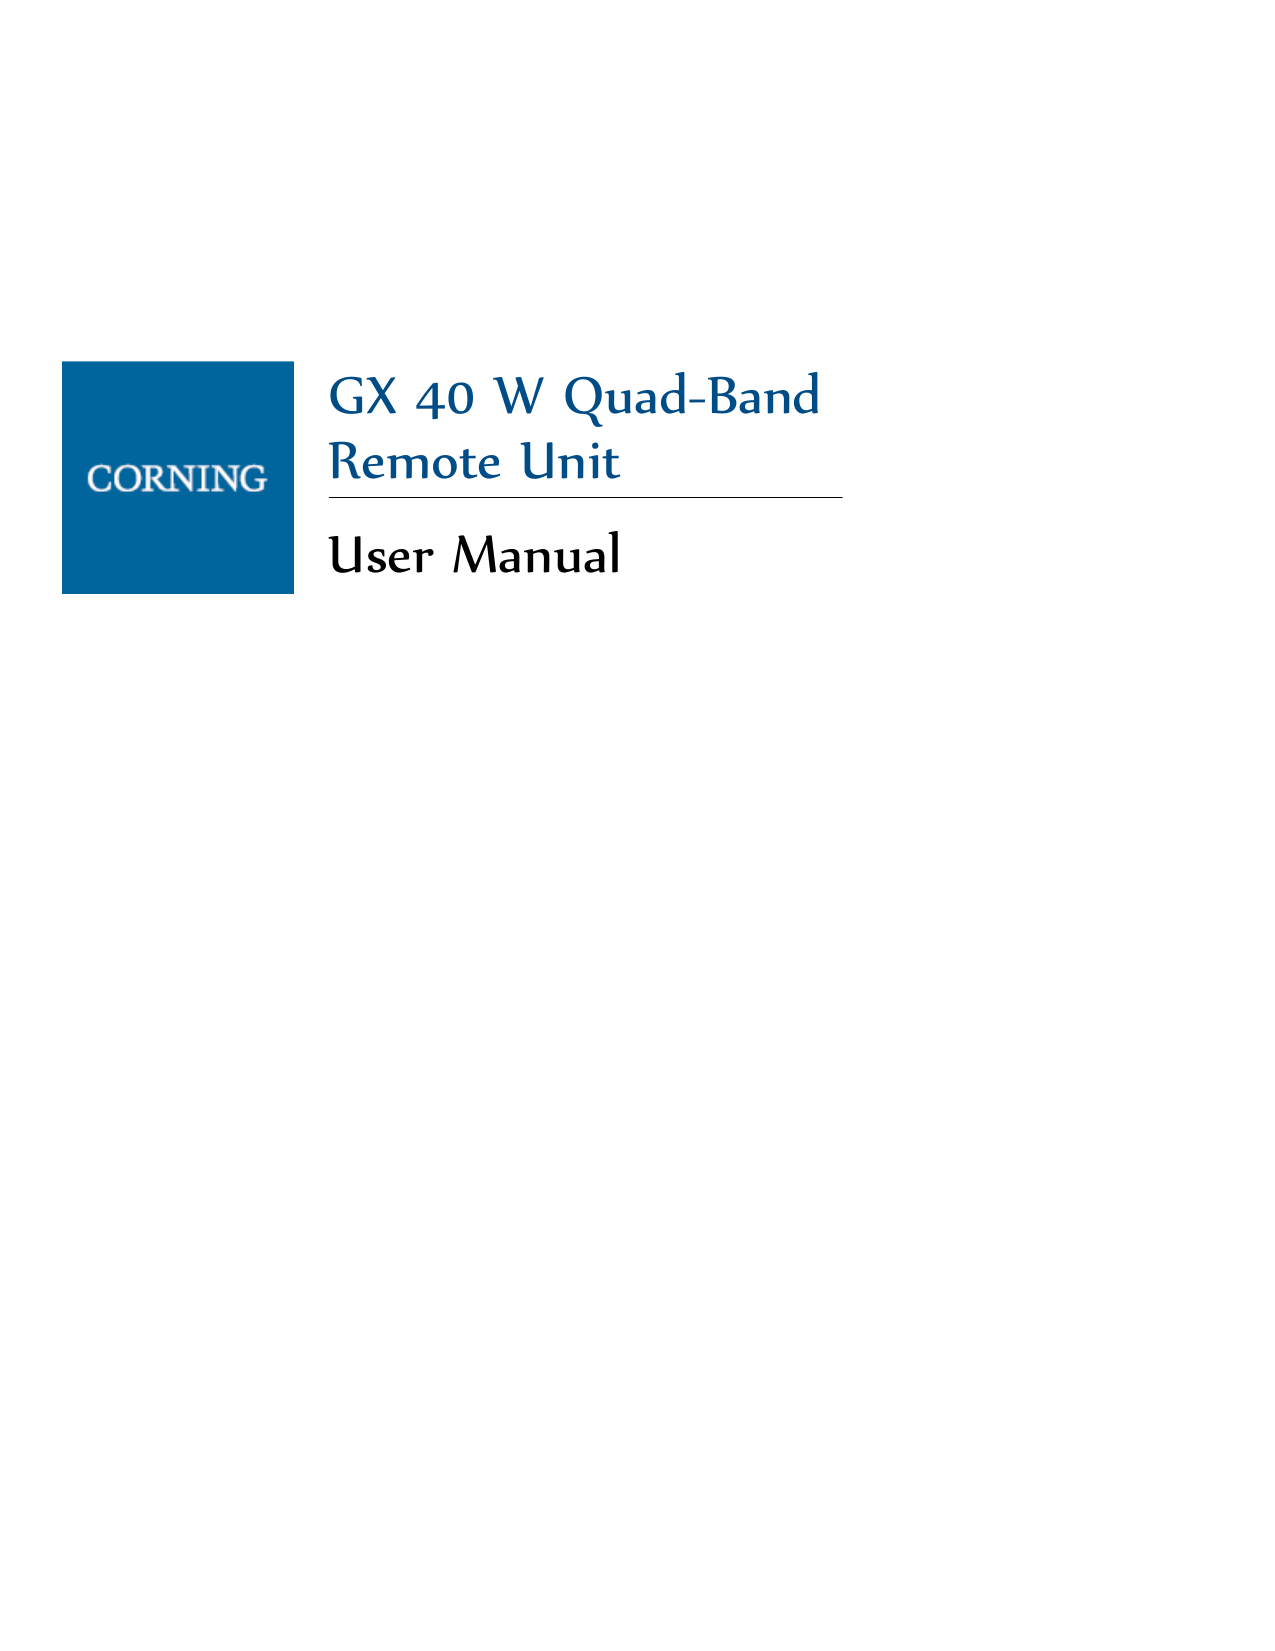               GX 40 W Quad-Band Remote Unit  User Manual 